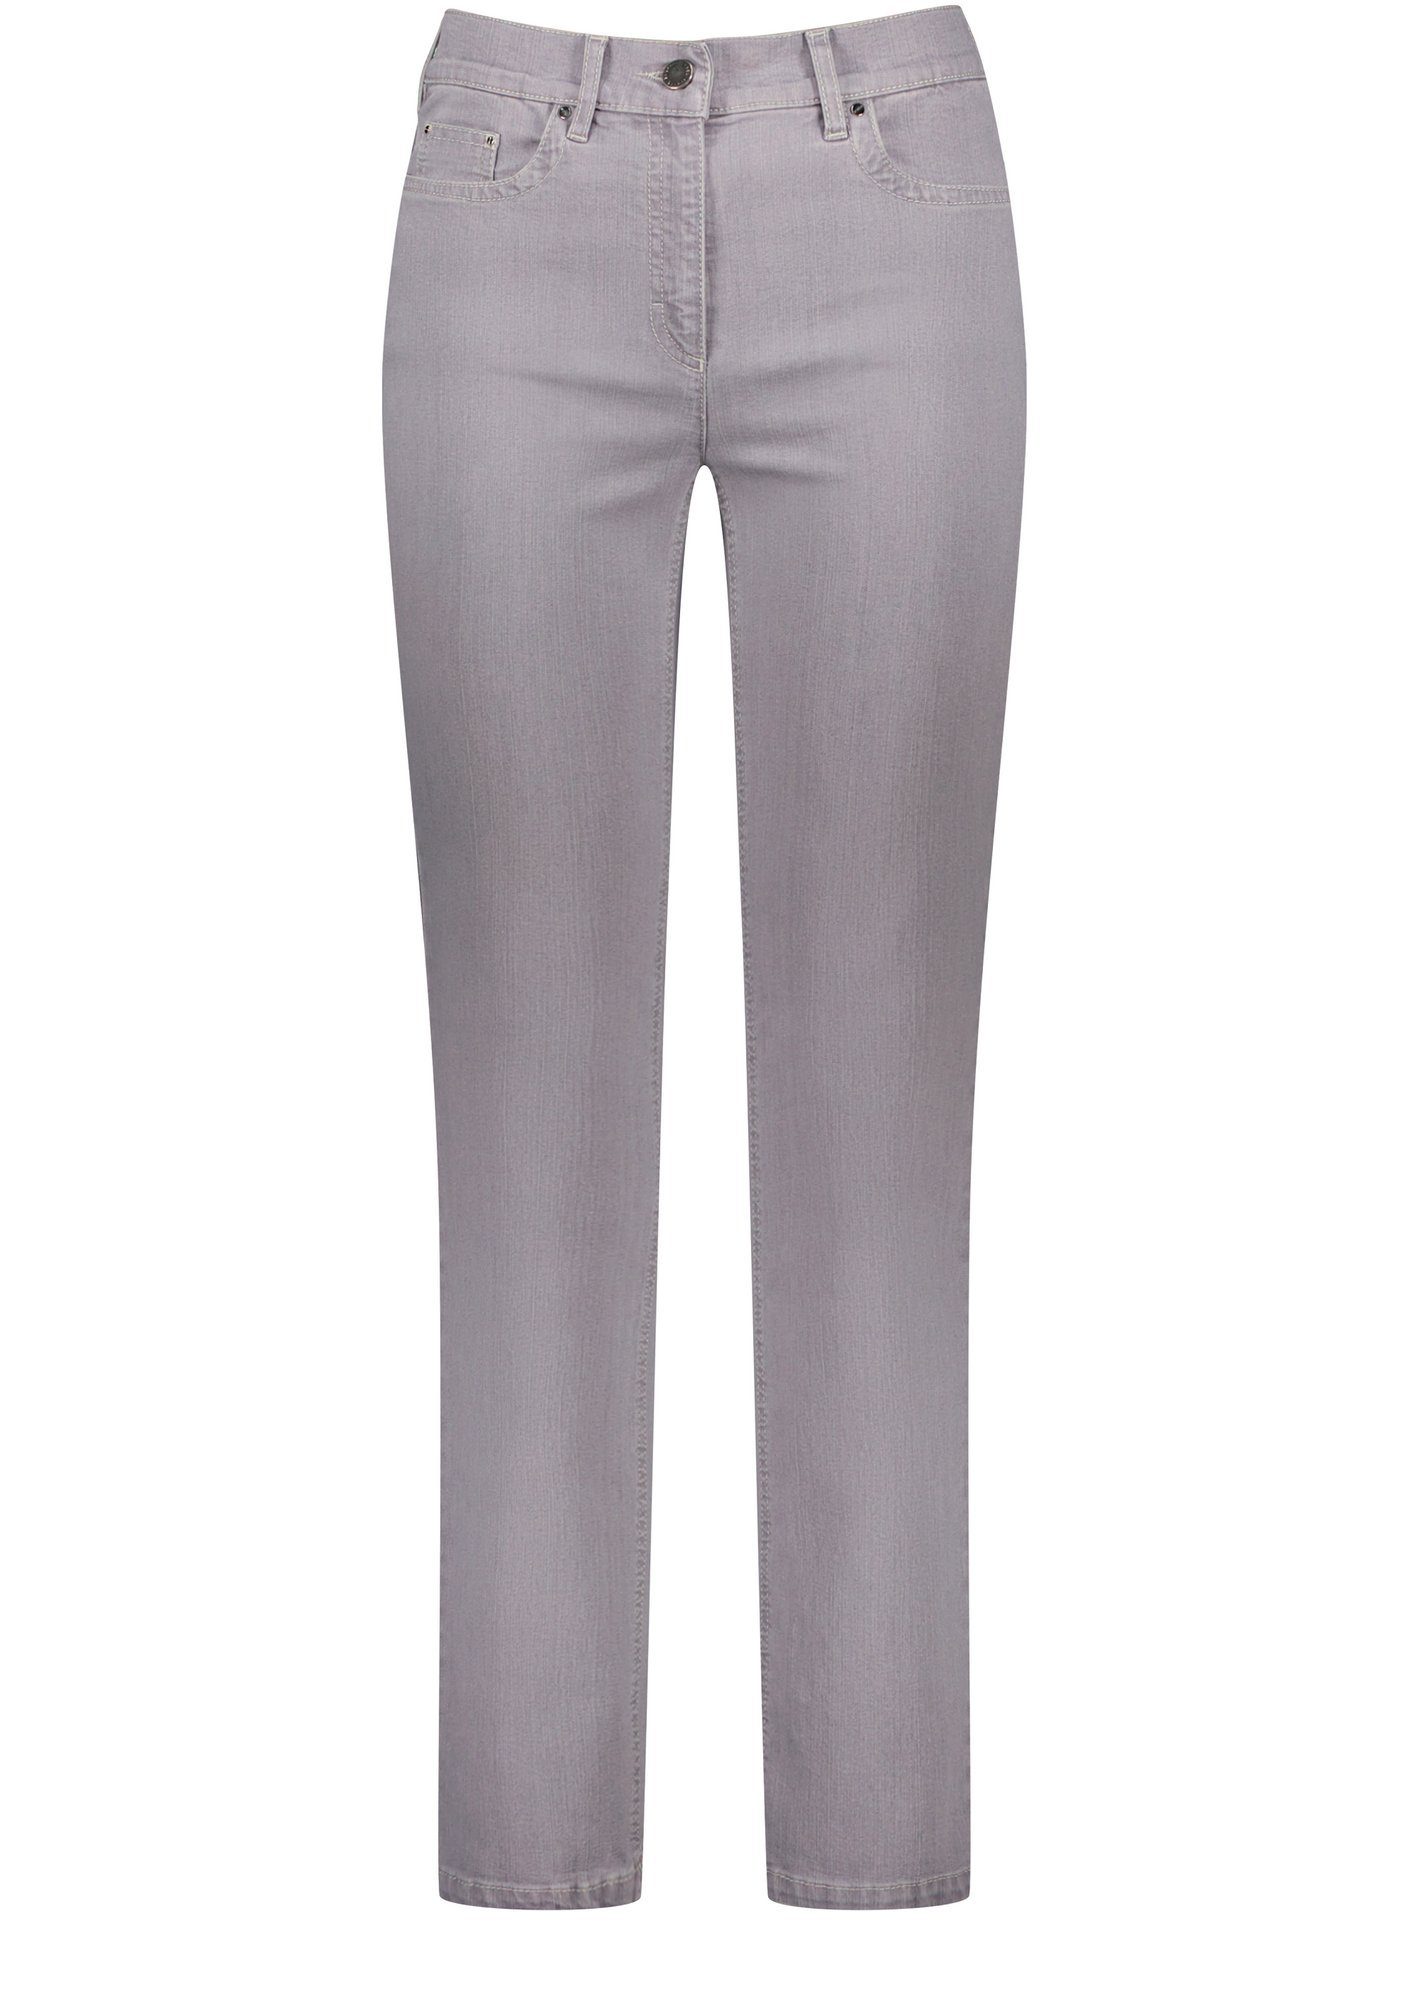 Zerres 5-Pocket-Jeans Greta (06797 511) grau (92)